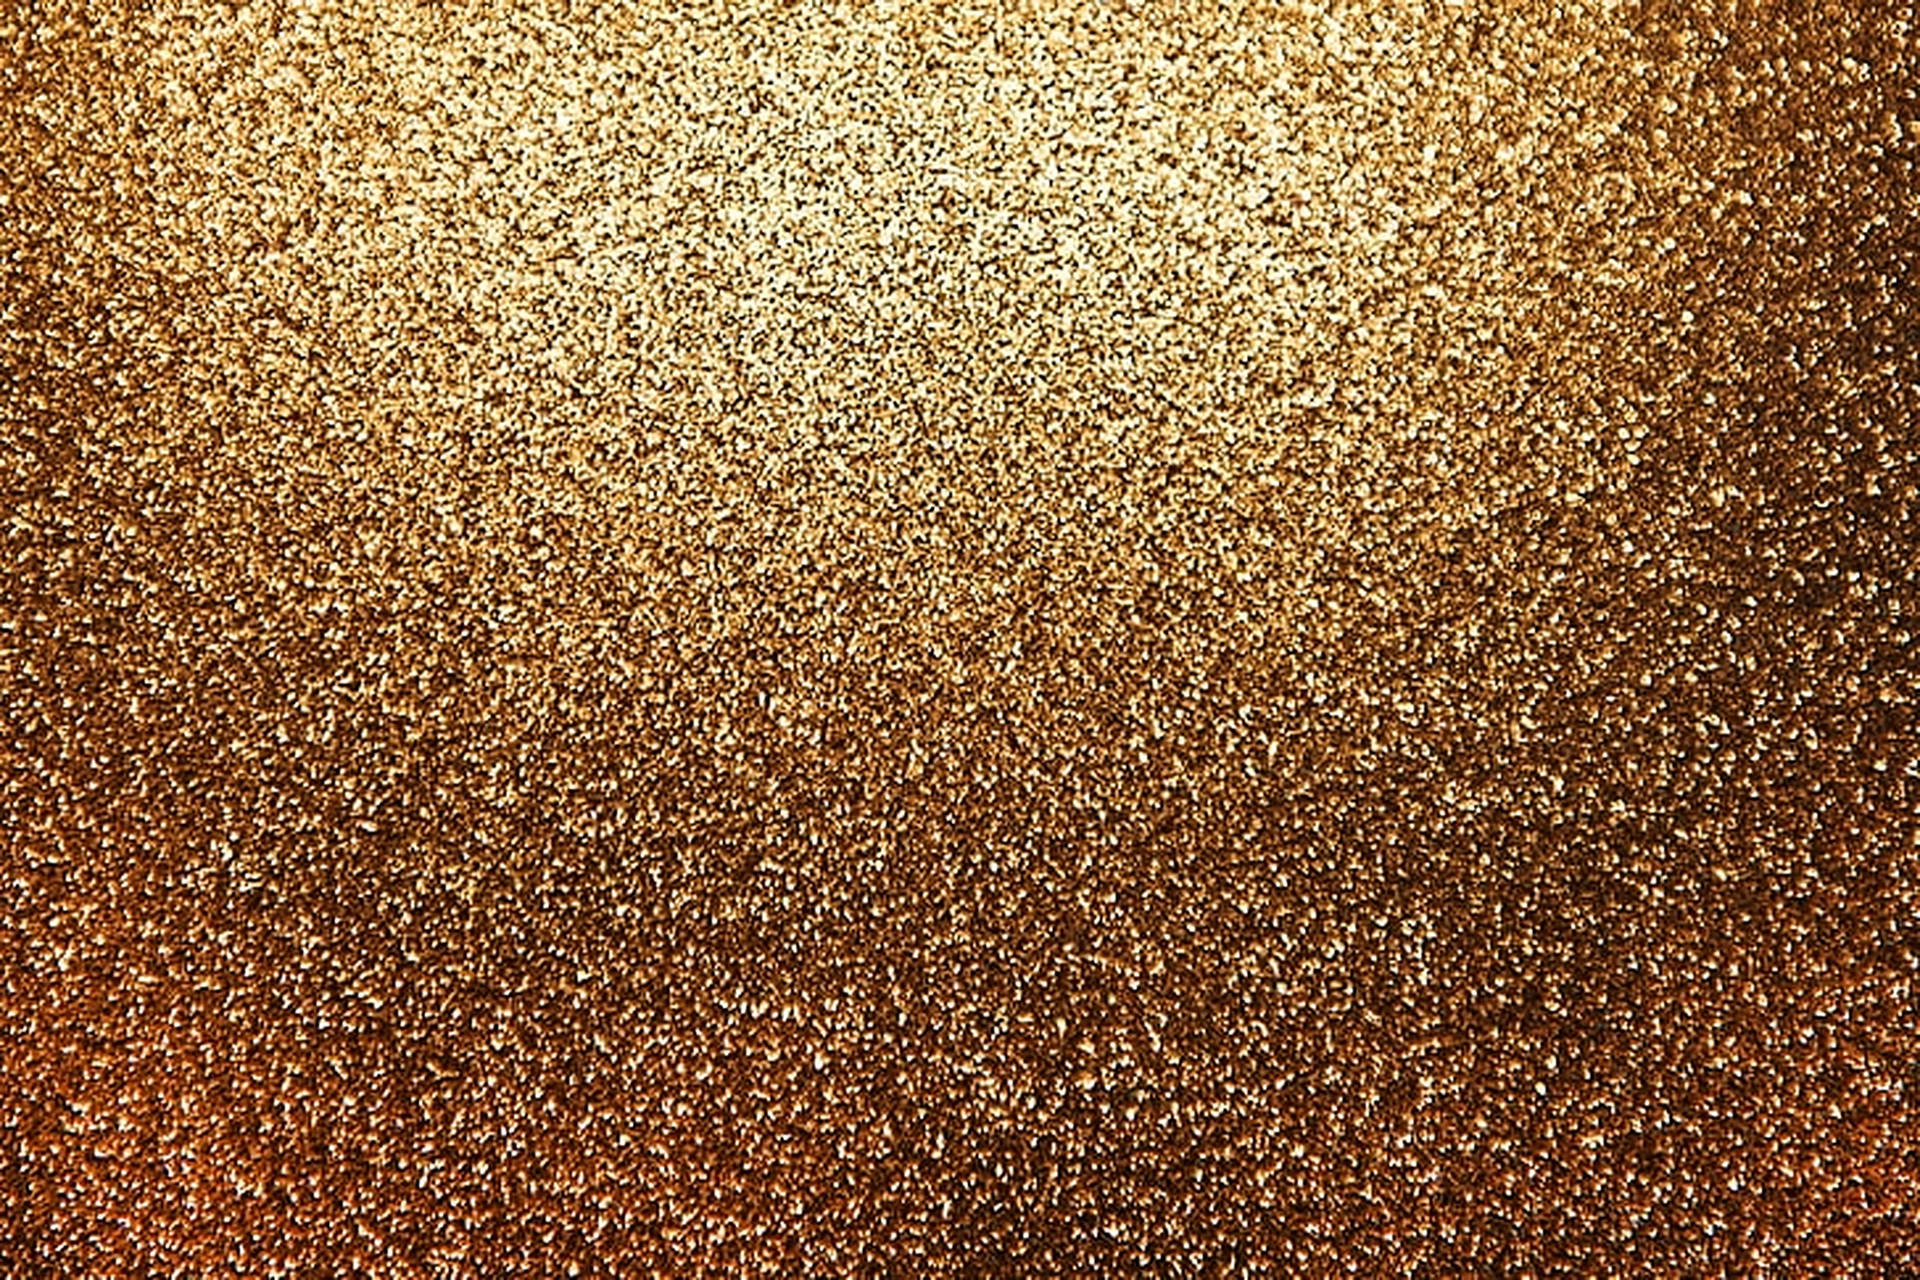 Gold Glitter Dust Background